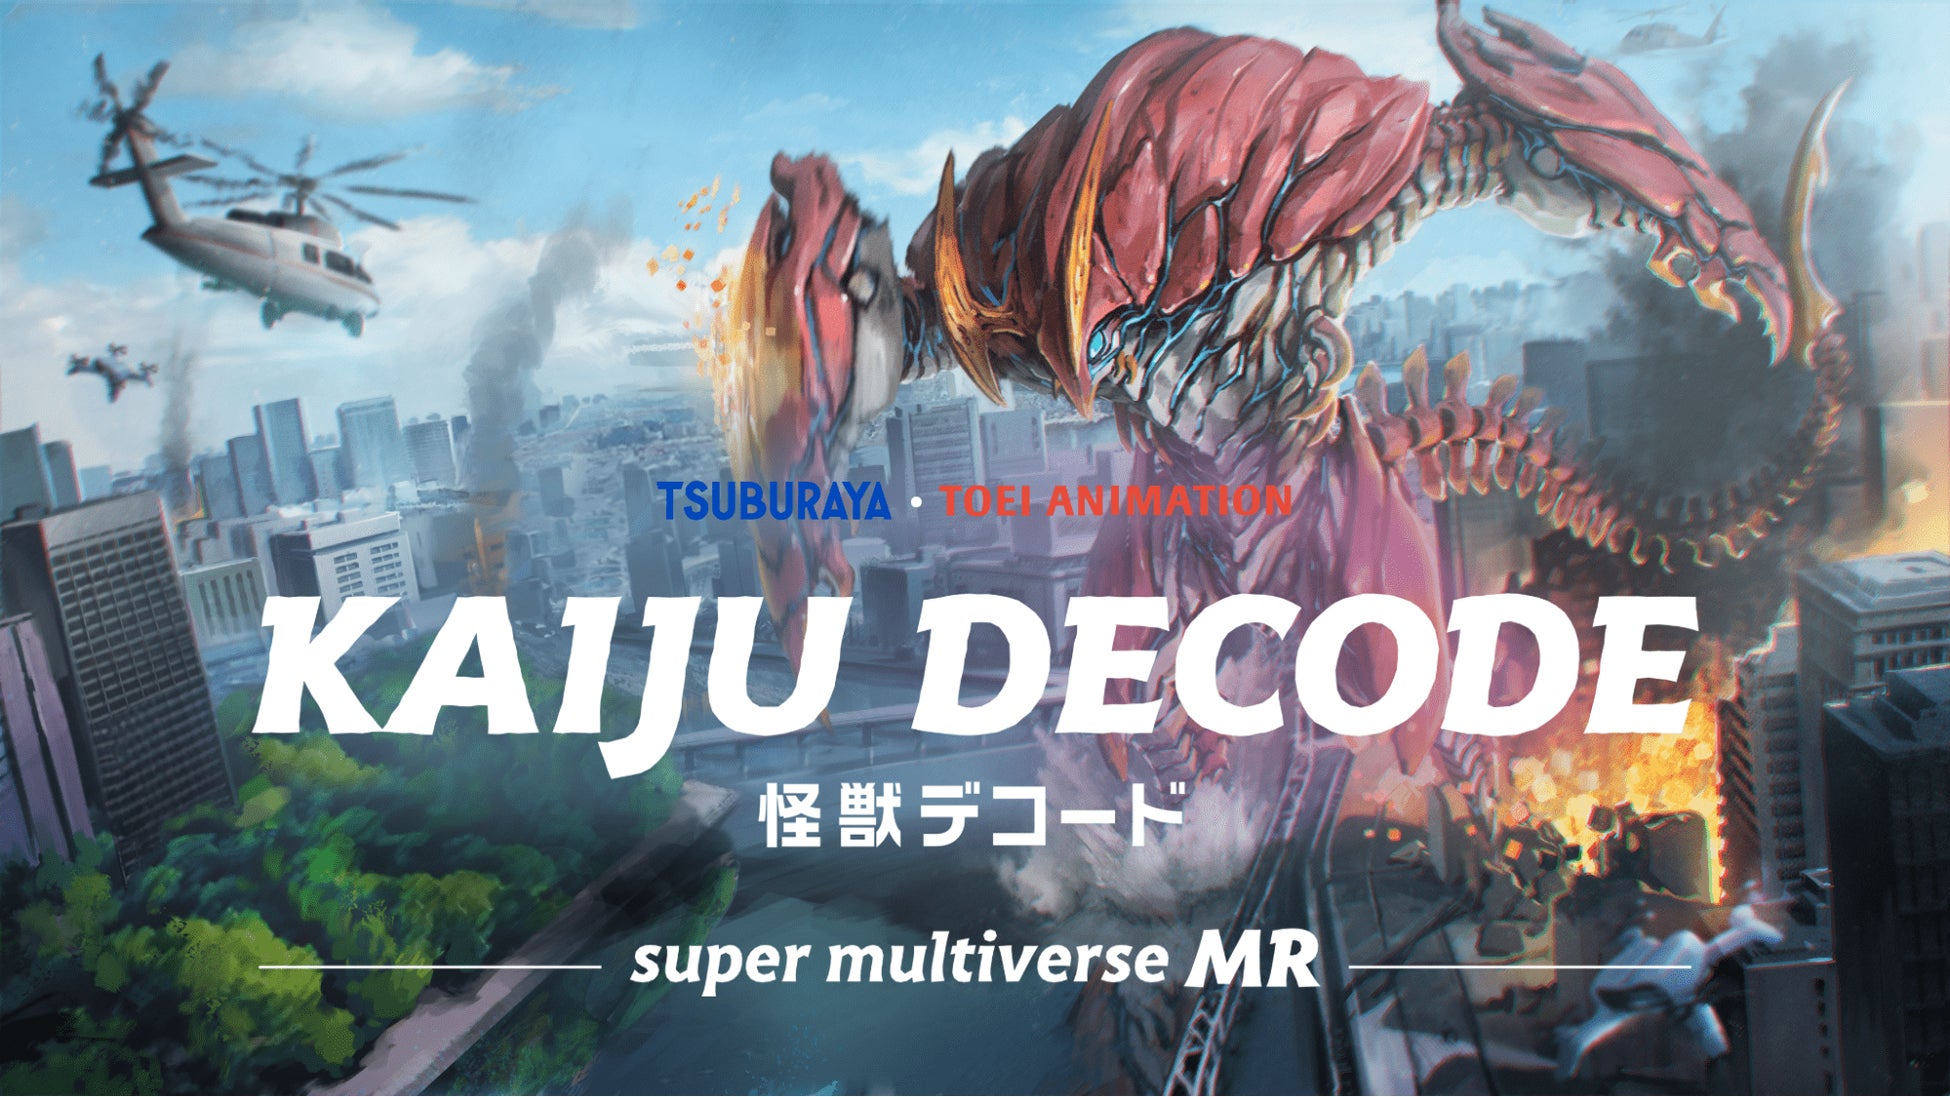 『KAIJU DECODE -super multiverse MR- 』円谷プロ×東映アニメーション作品のMRゲームのリリースを決定